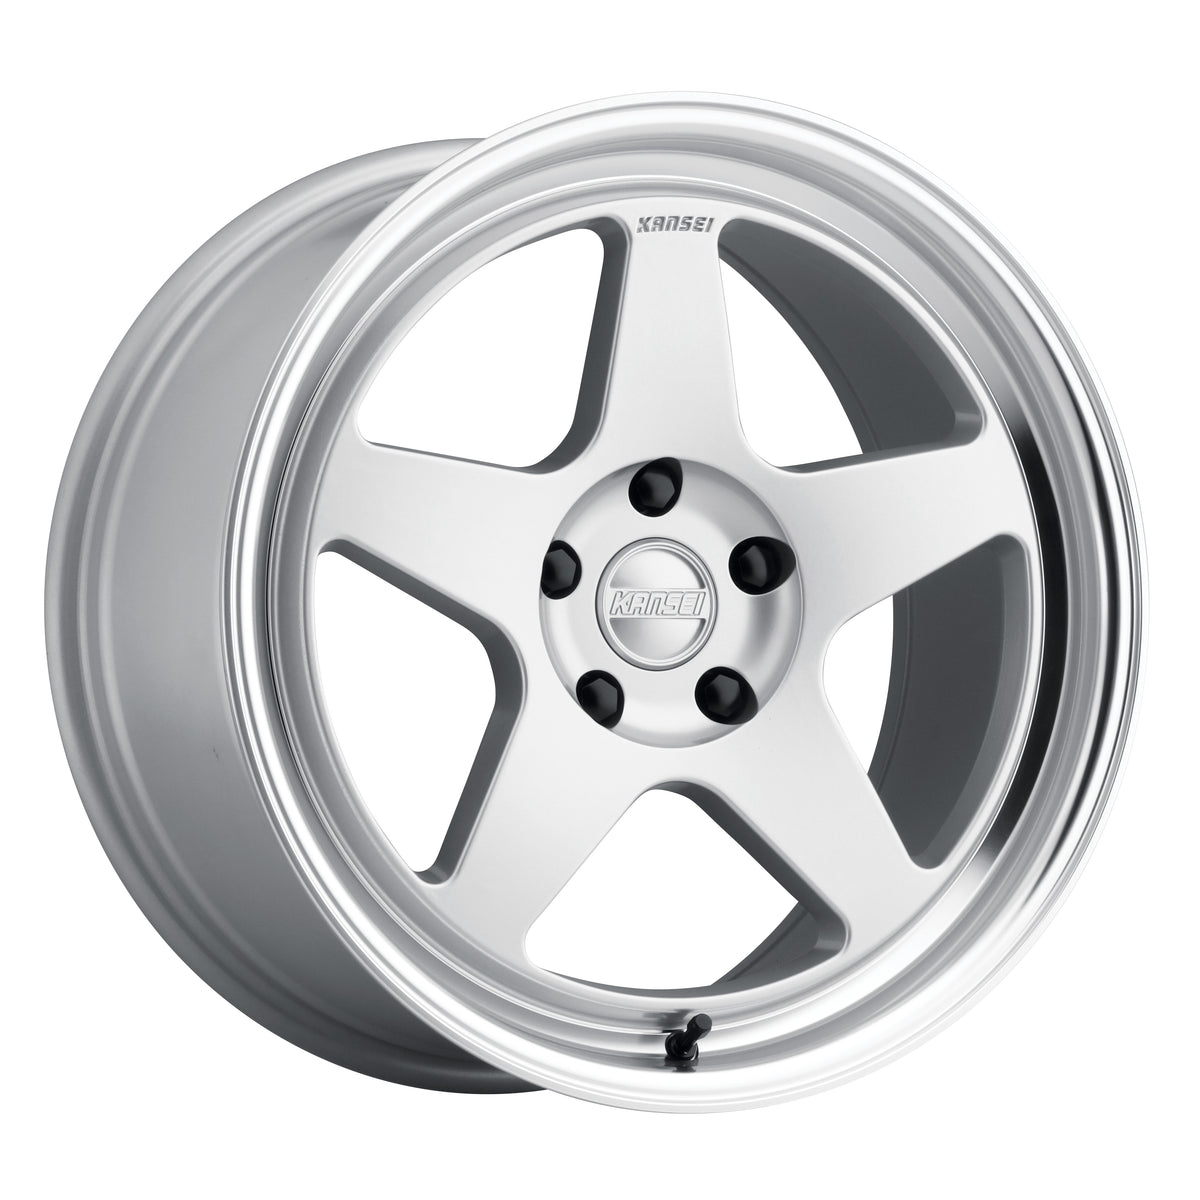 K12H KNP Wheel, Size: 19" x 10.50", Bolt Pattern: 5 x 120 mm, Backspace: 6.62" [Finish: Hyper Silver]